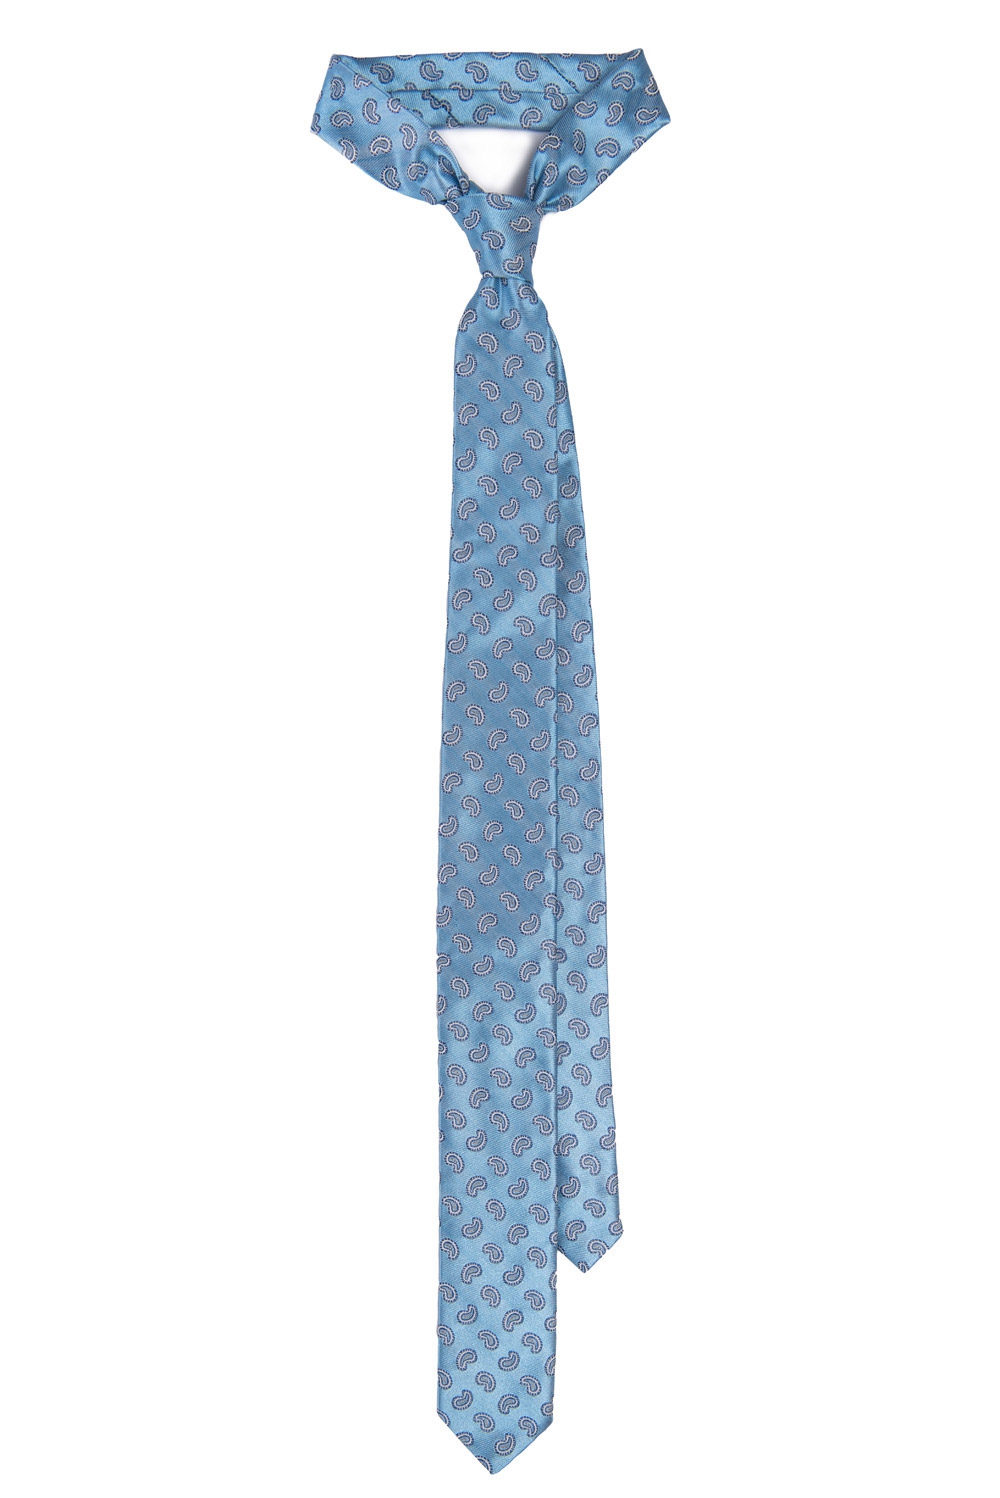 Cravata poliester bleu print floral 0